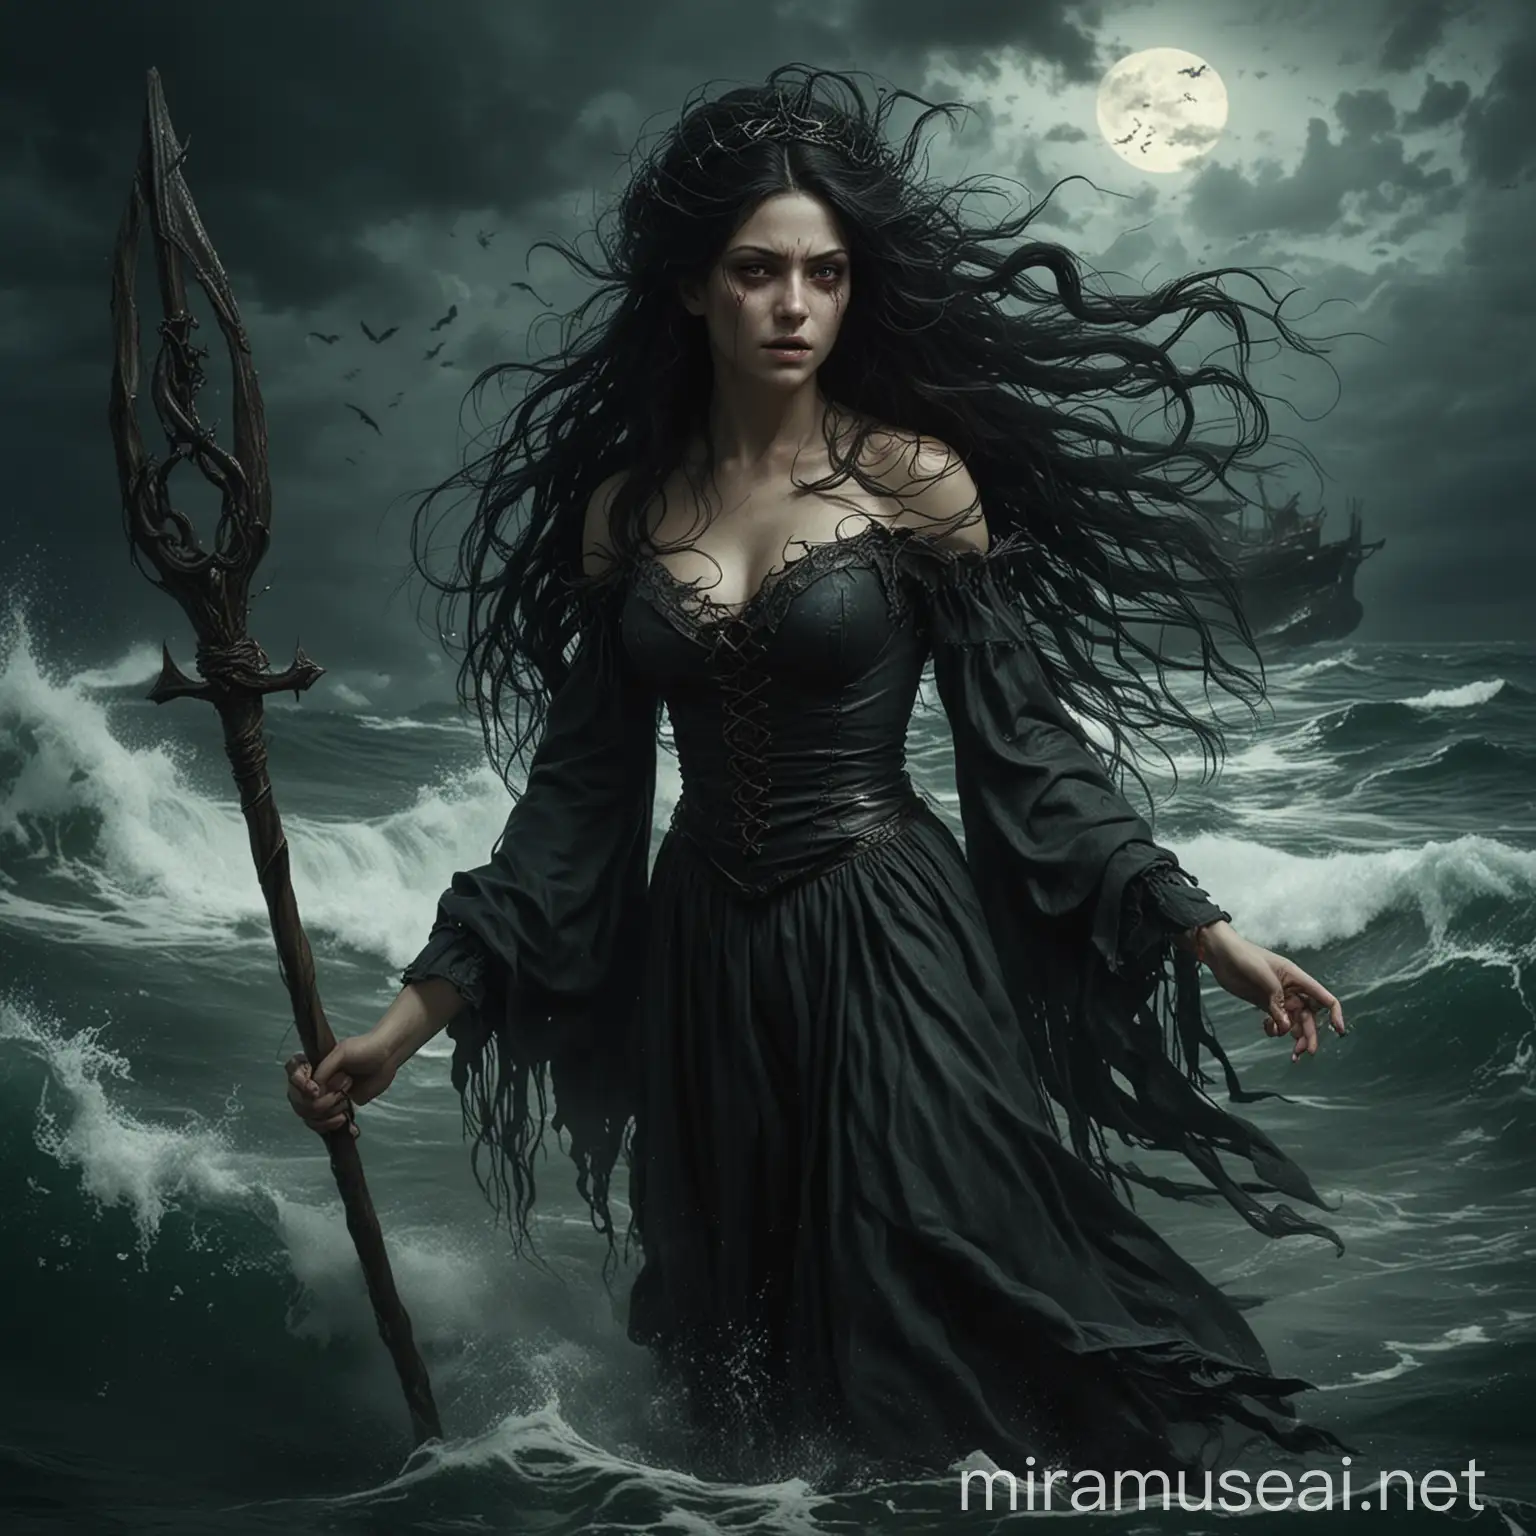 Malevolent Sea Witch with Sinister Aura